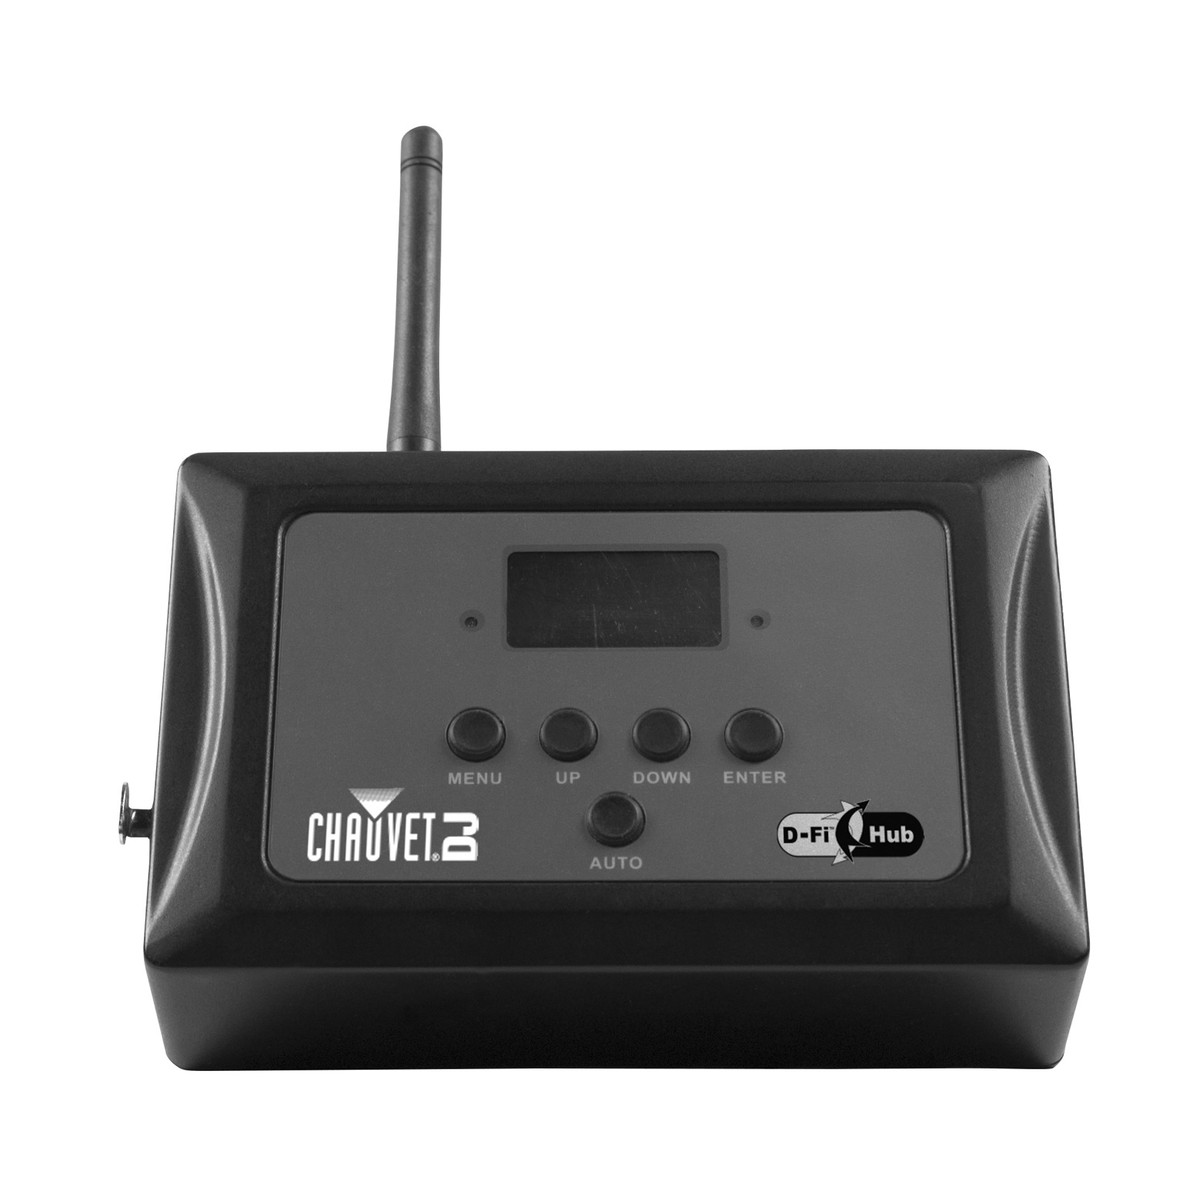 D-Fi Hub-(Desk)-Transmitter-Control-accessories (1)